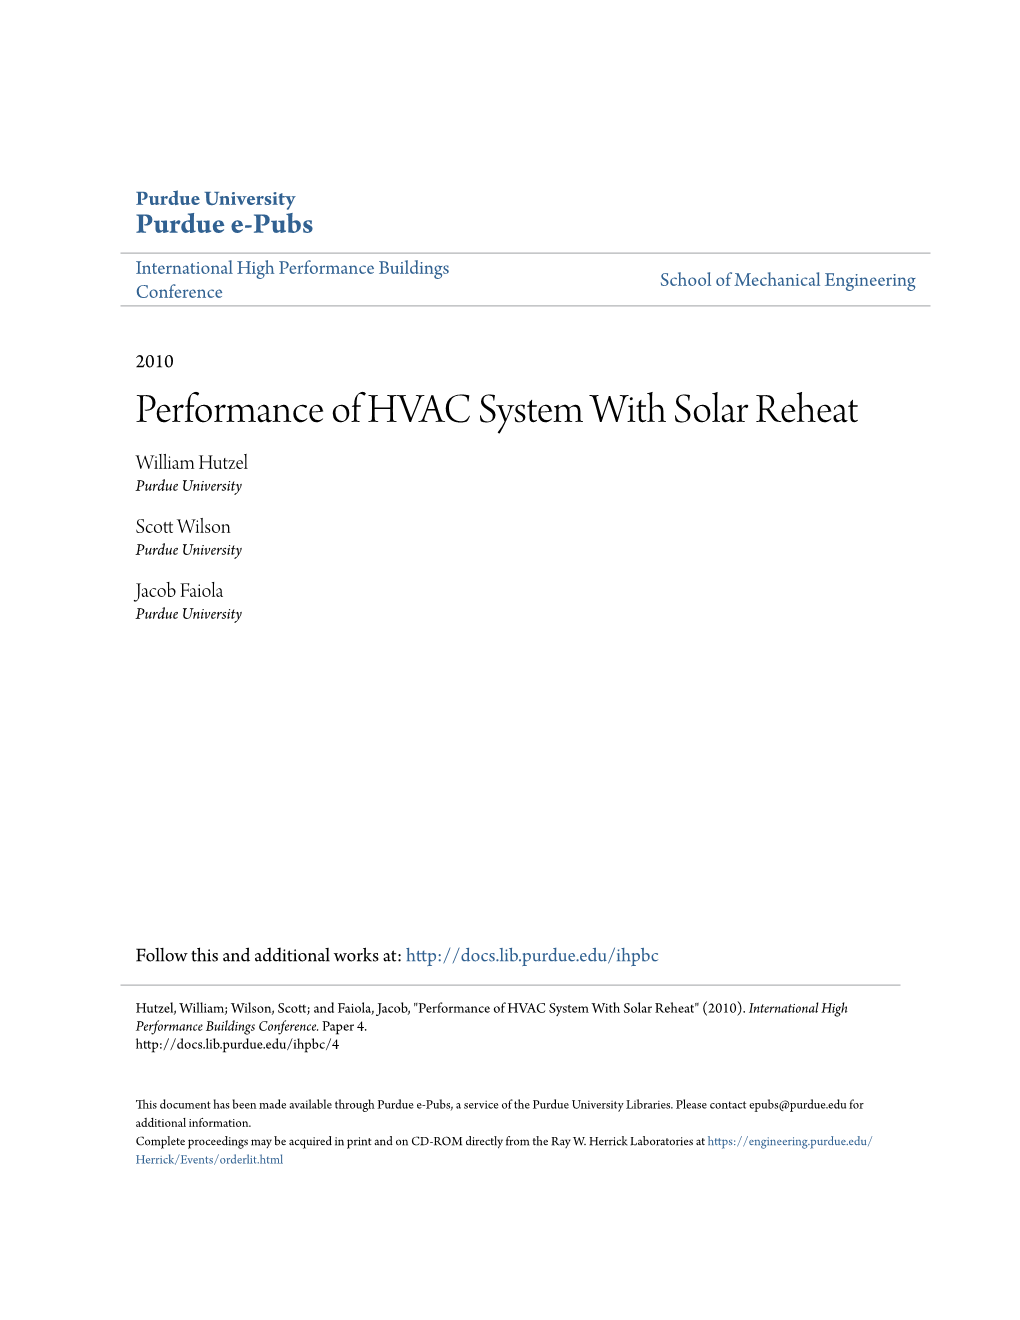 Performance of HVAC System with Solar Reheat William Hutzel Purdue University